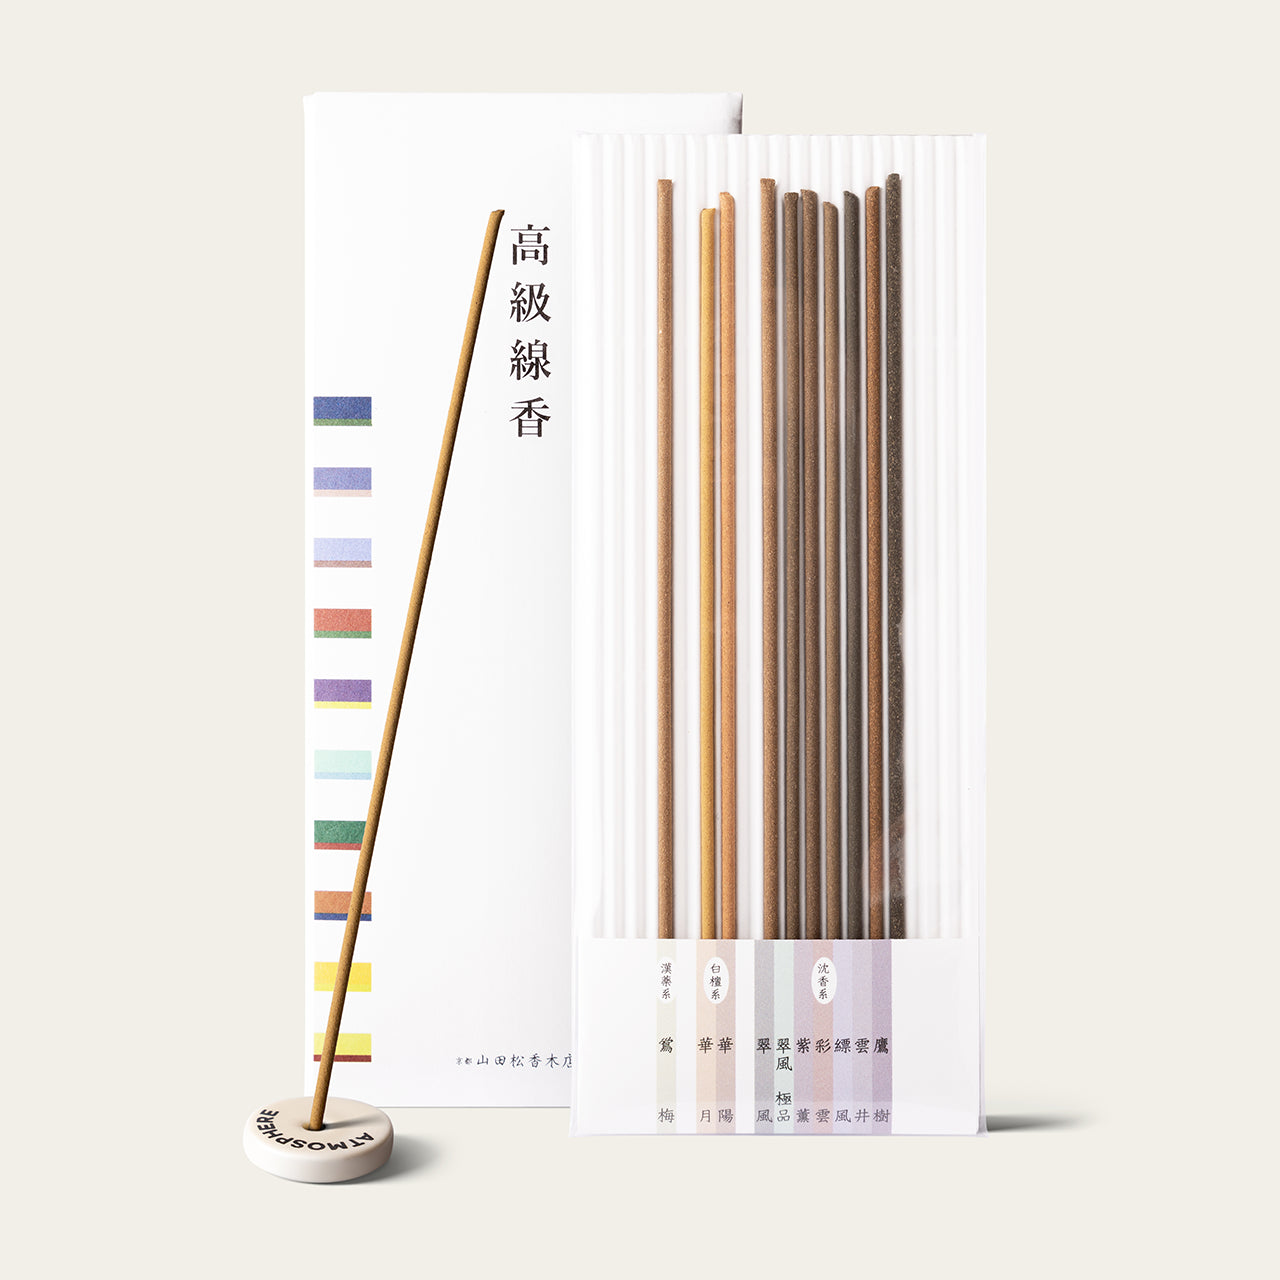 Yamadamatsu Premium Discovery Set Japanese incense sticks (10 sticks) with Atmosphere ceramic incense holder